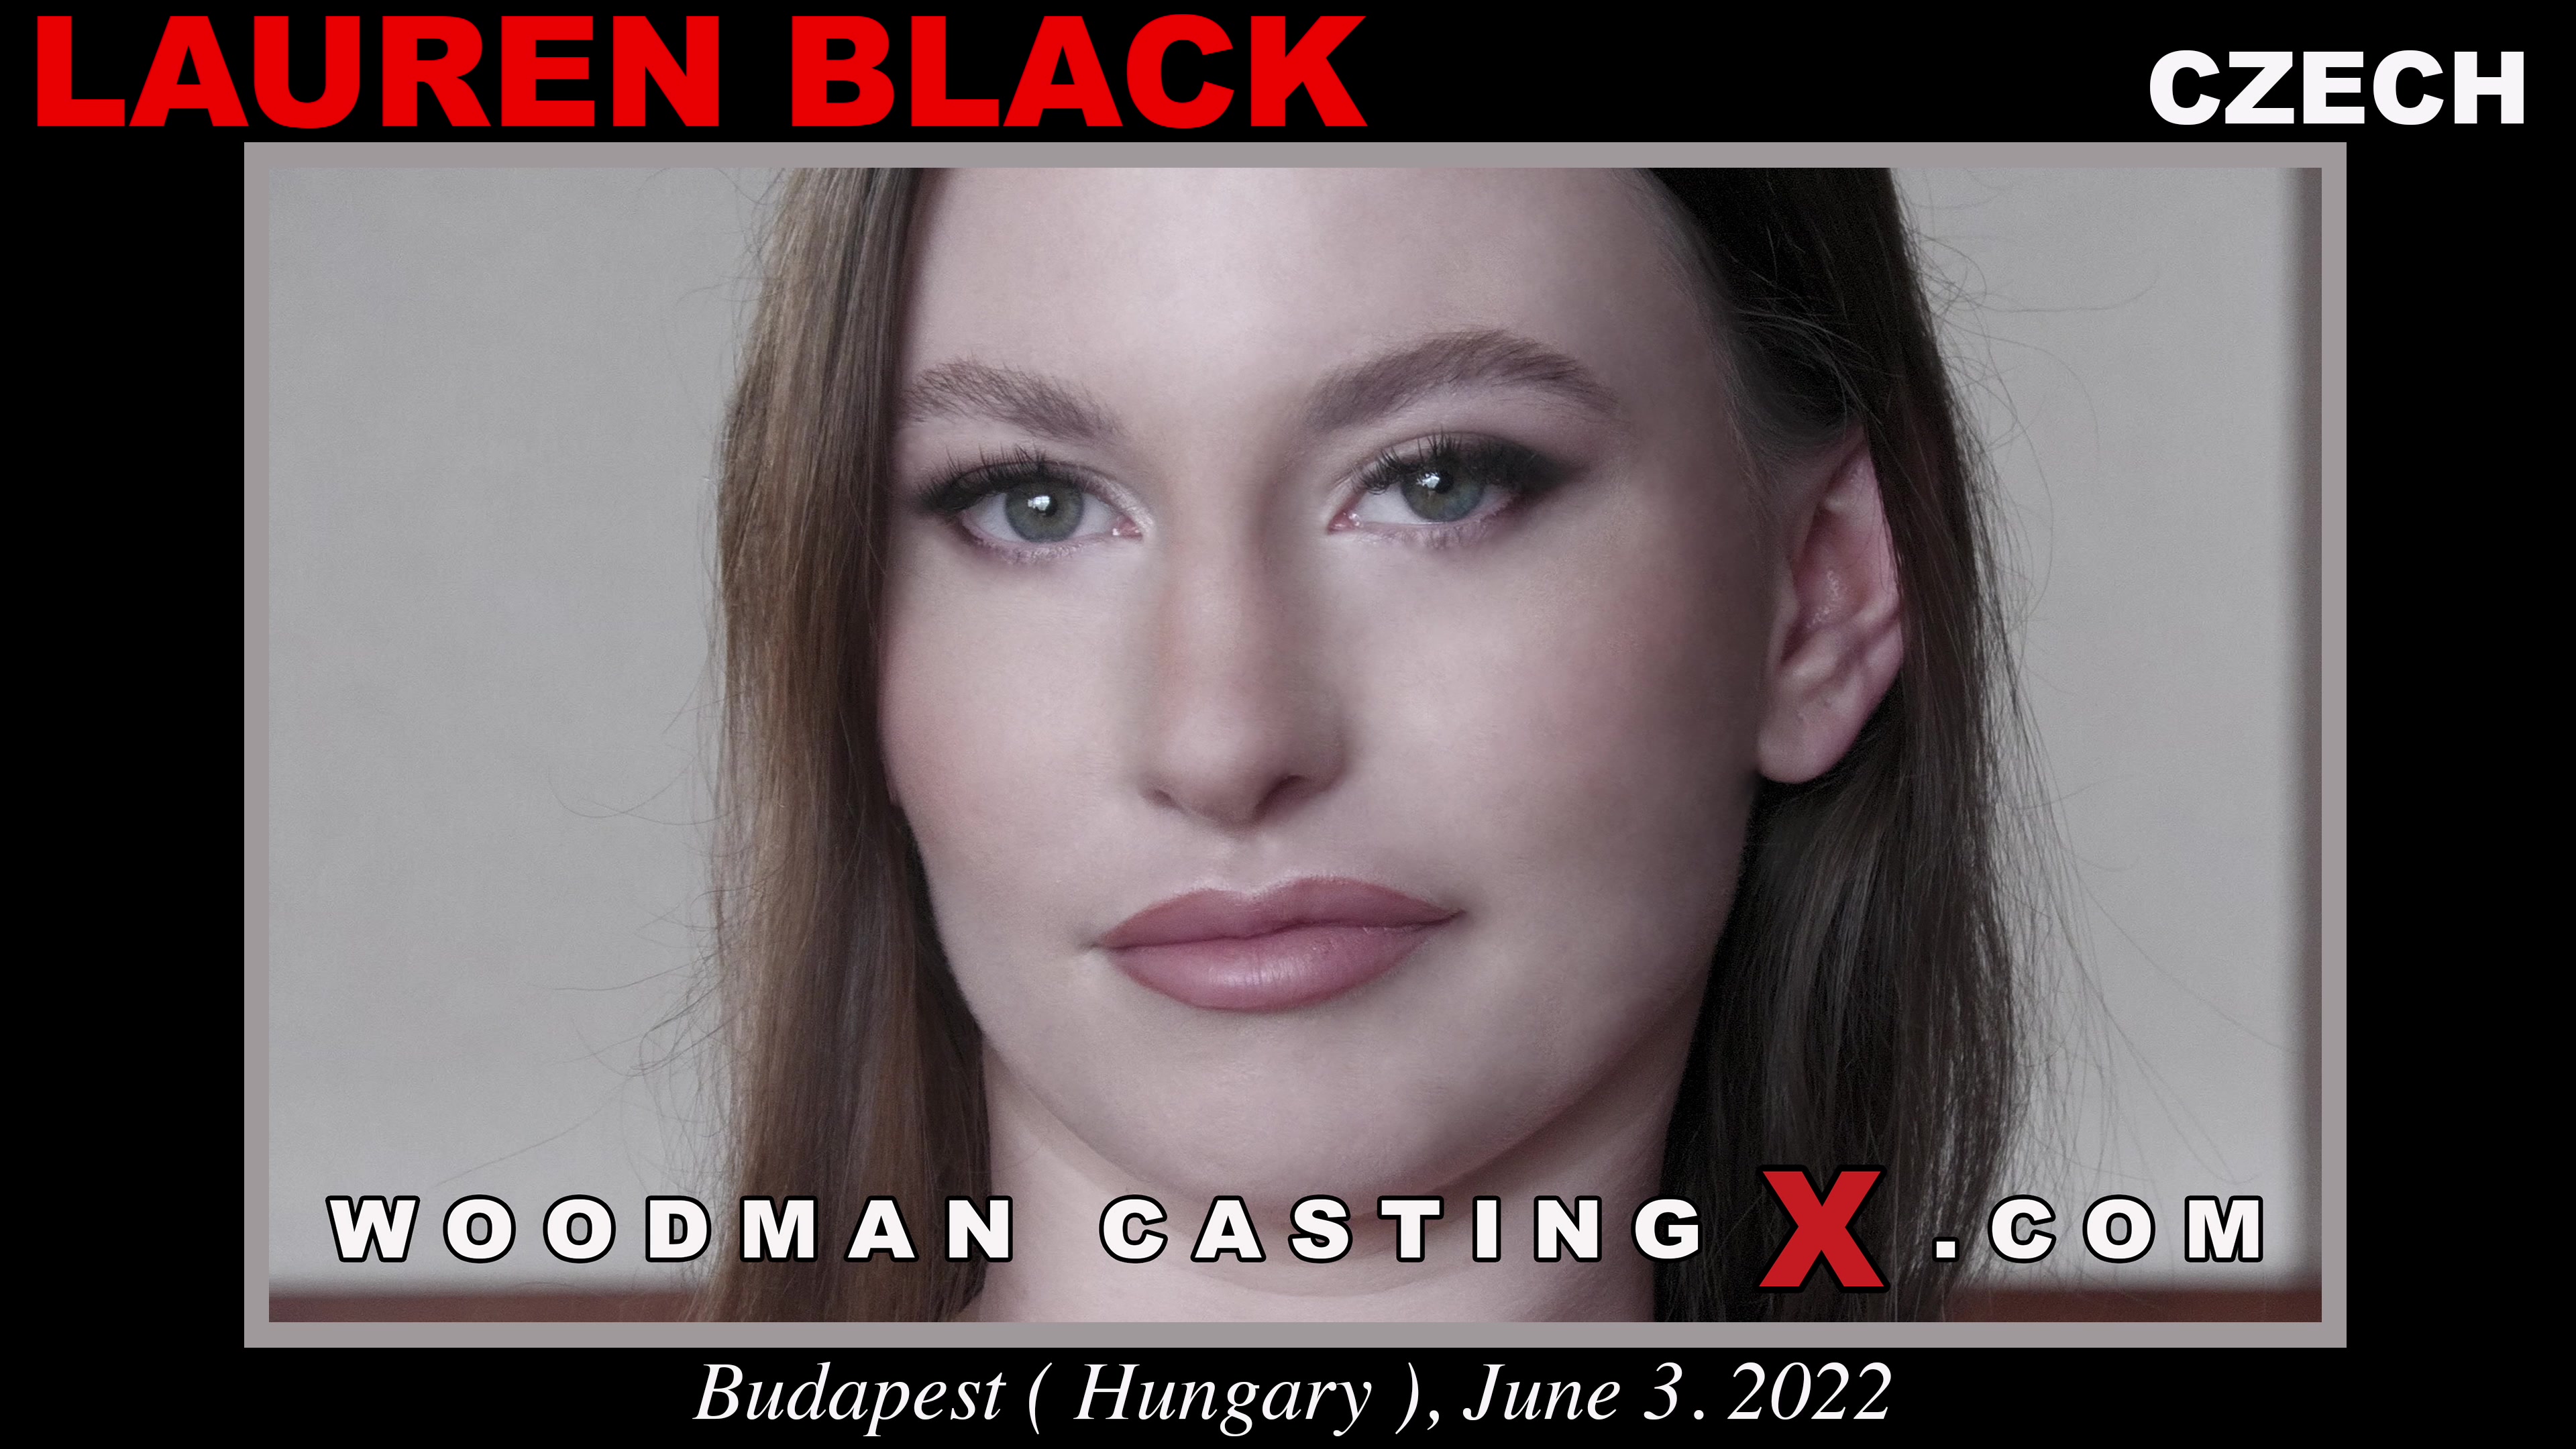 Woodman Casting X On Twitter New Video Lauren Black 